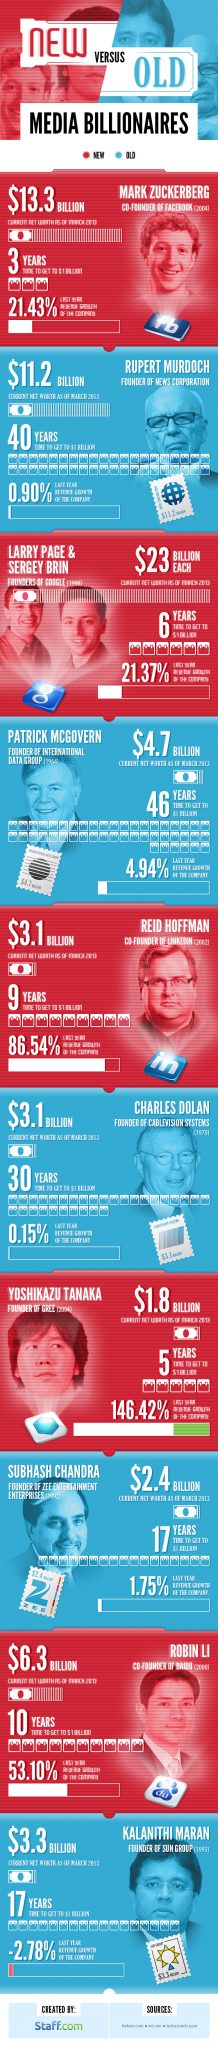 Staff.com presents New vs Old Media Billionaires - Infographic